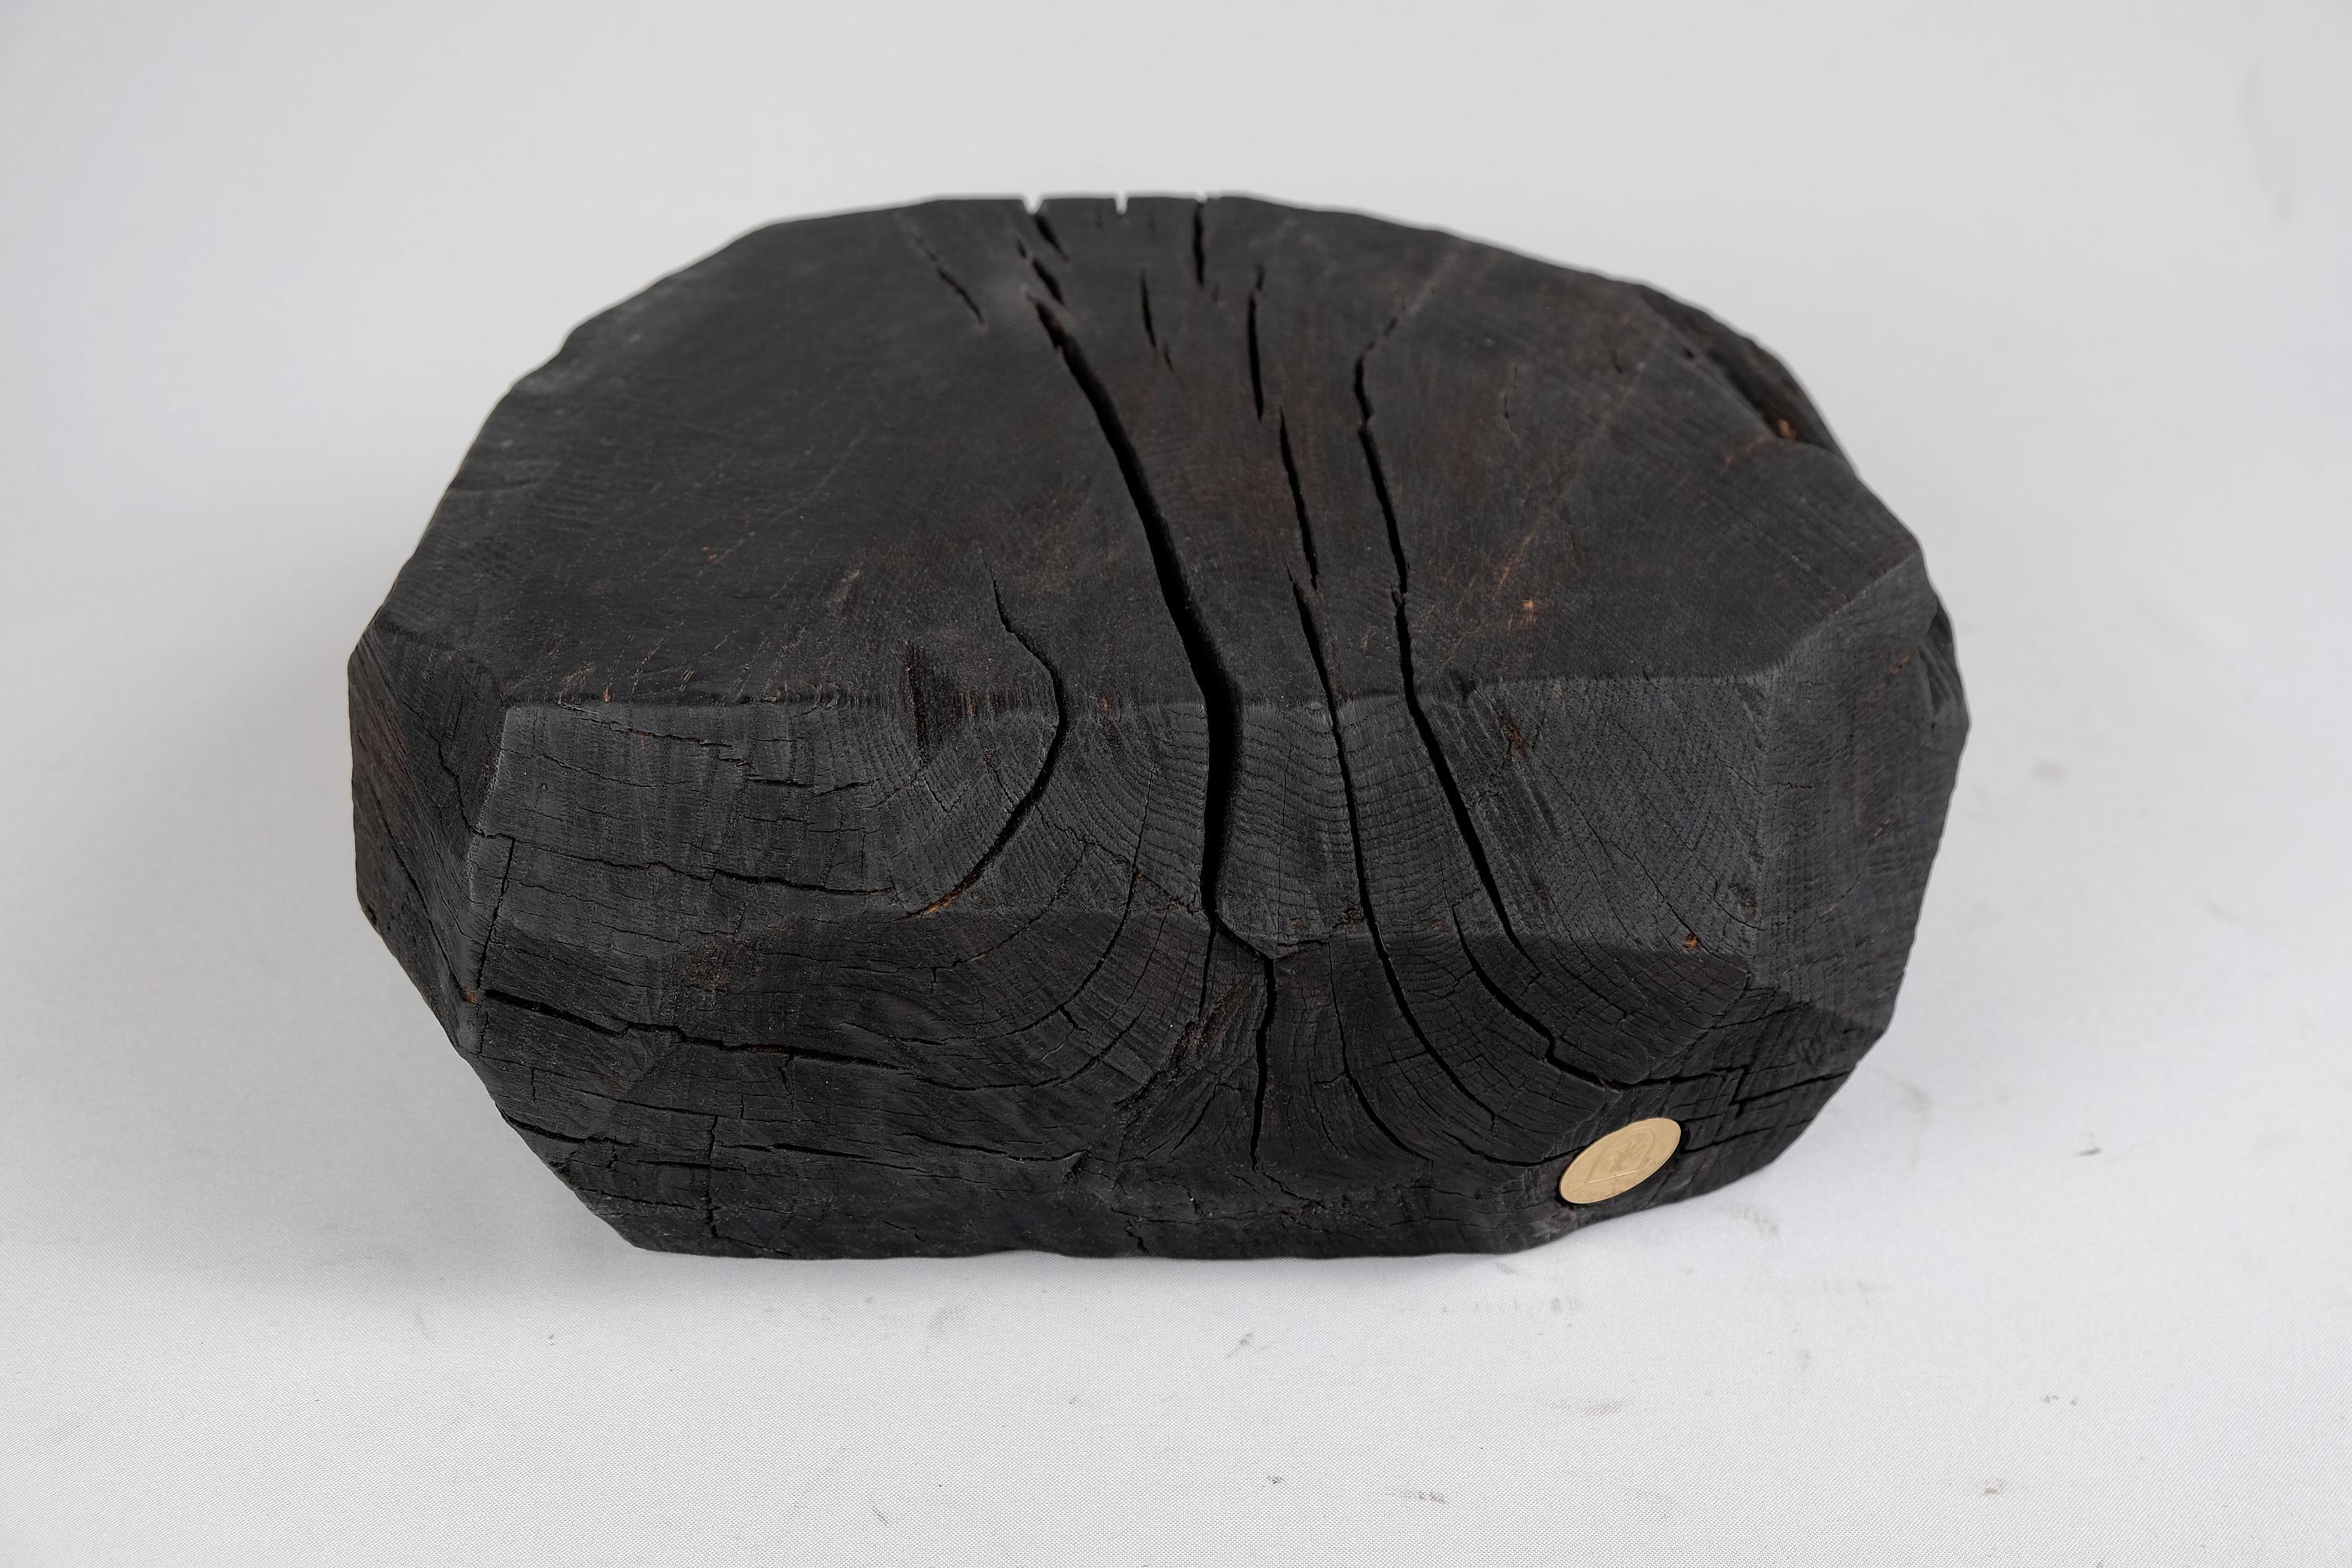 Contemporary Solid Burnt Wood, Sculptural Stool/Side Table, Rock, Original Design, Logniture For Sale